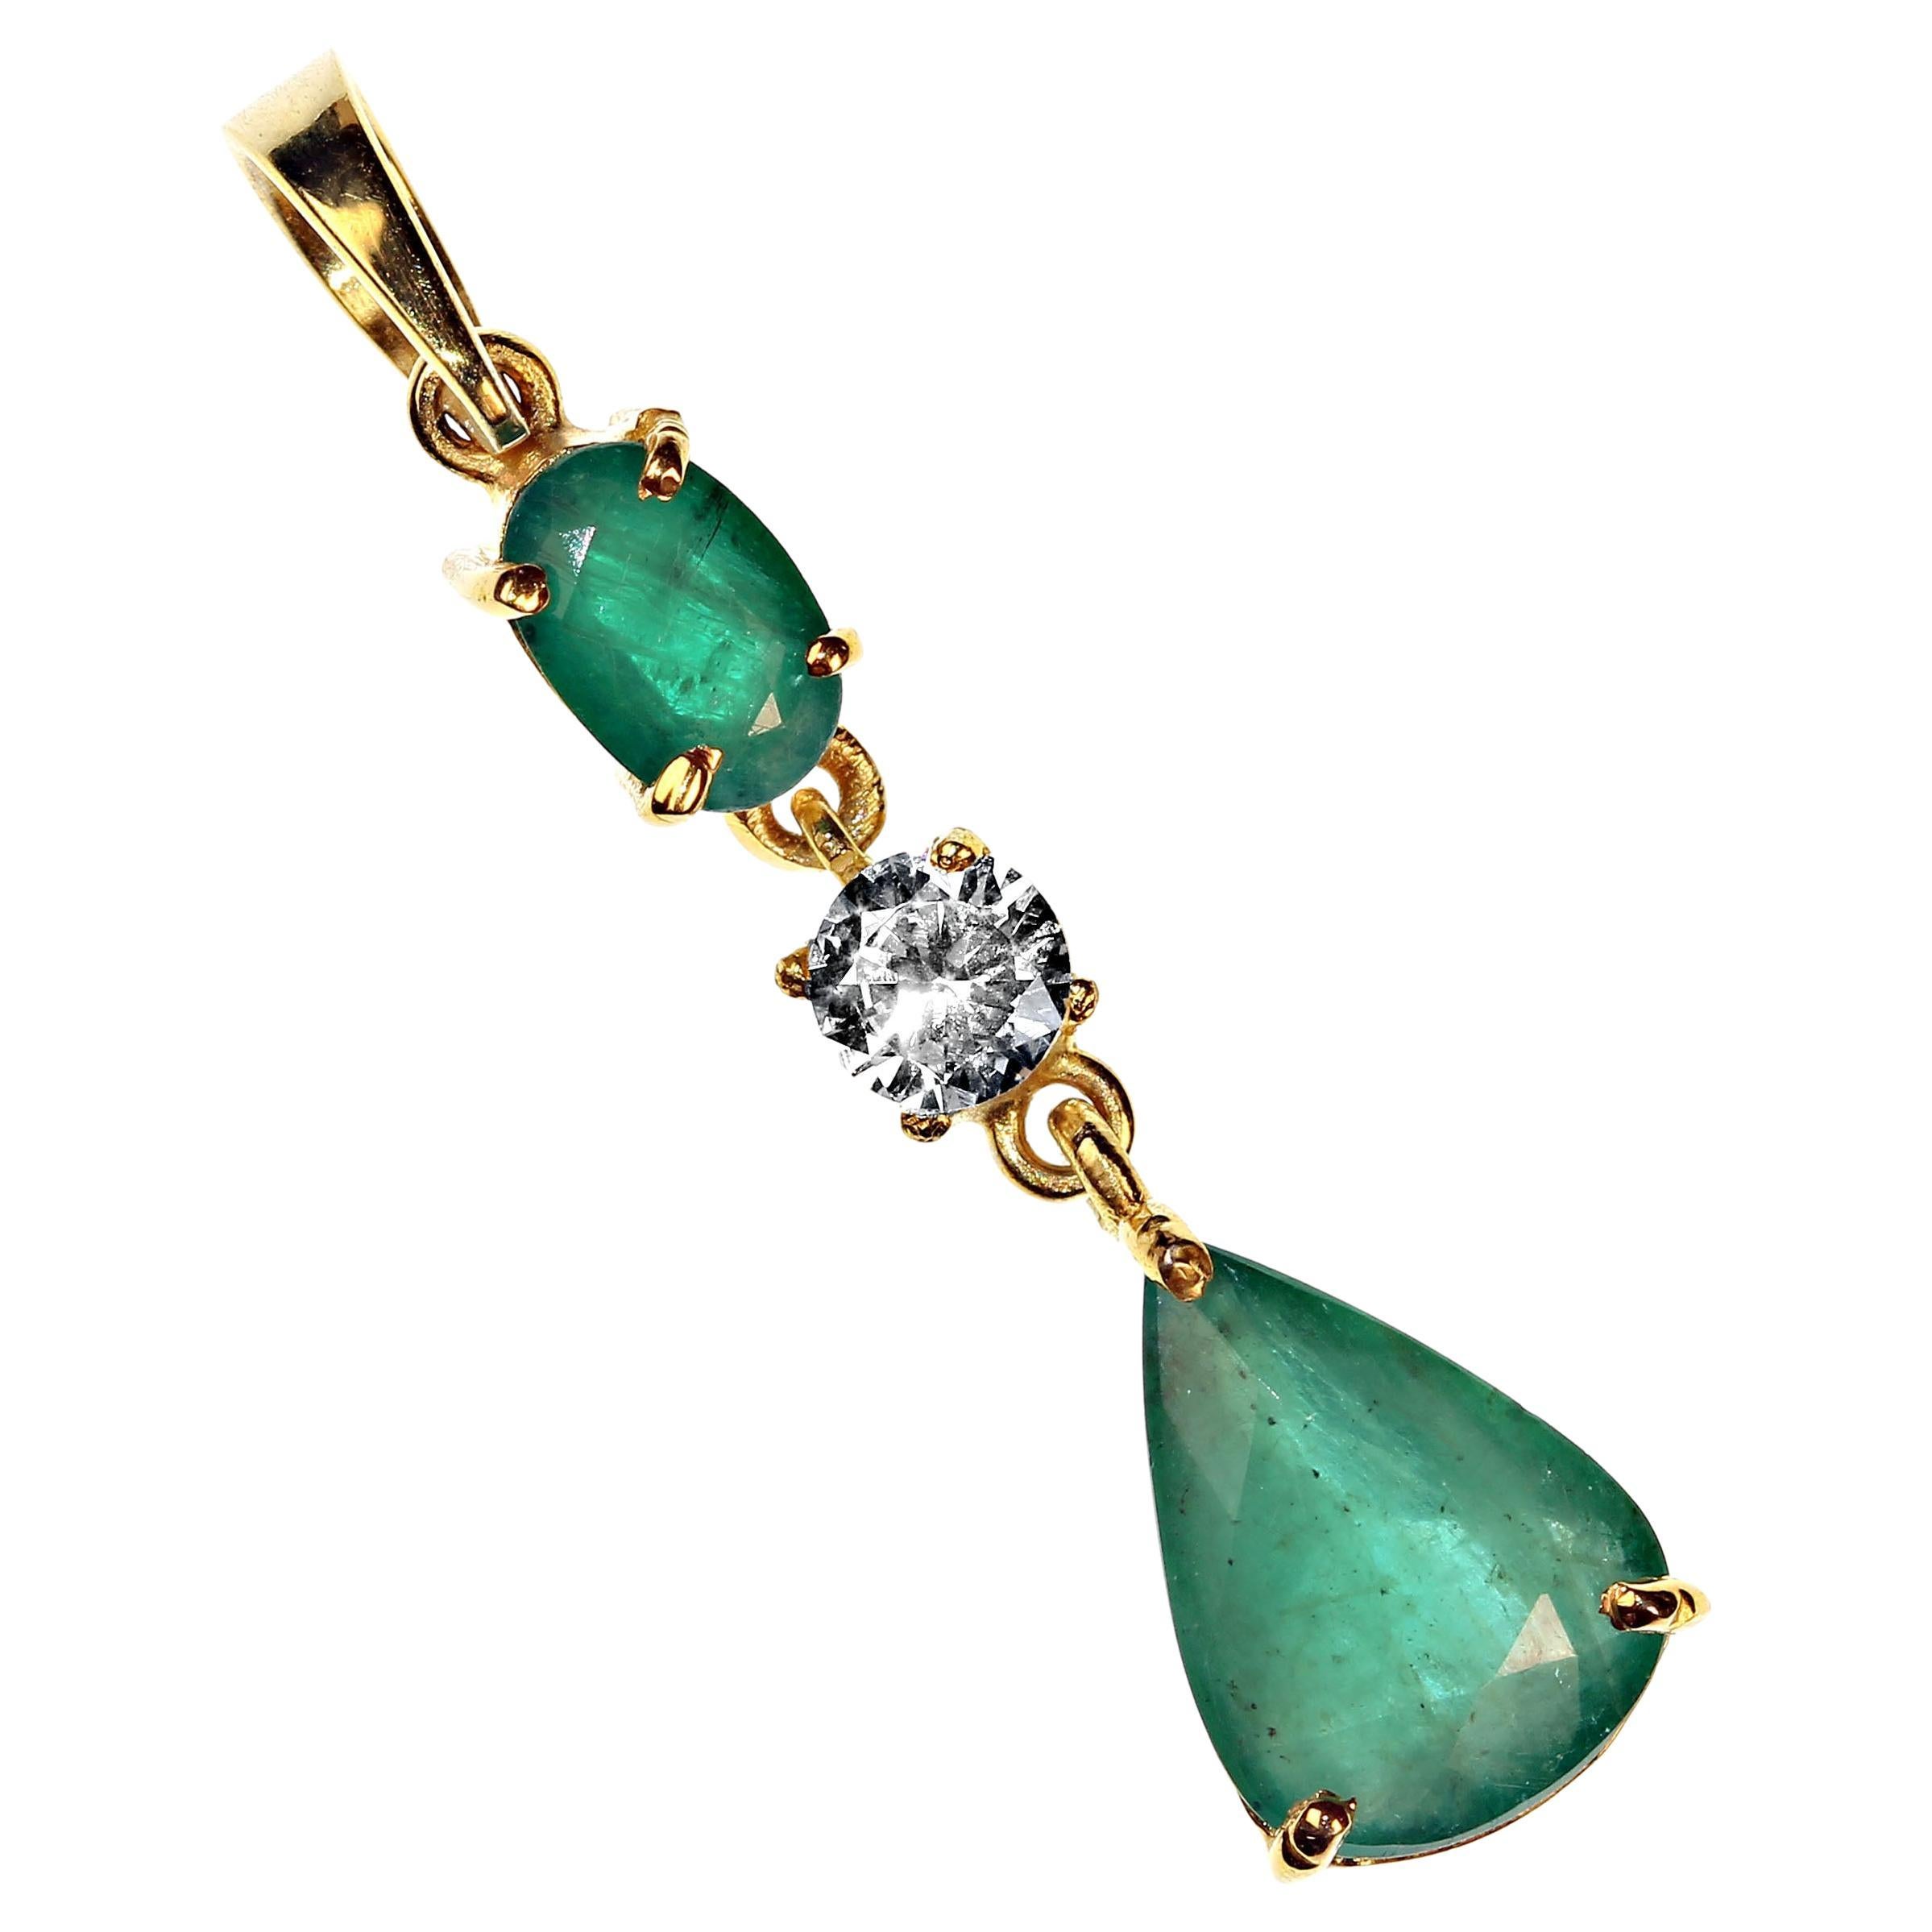 Aria Jewelry Design Pendant Necklaces